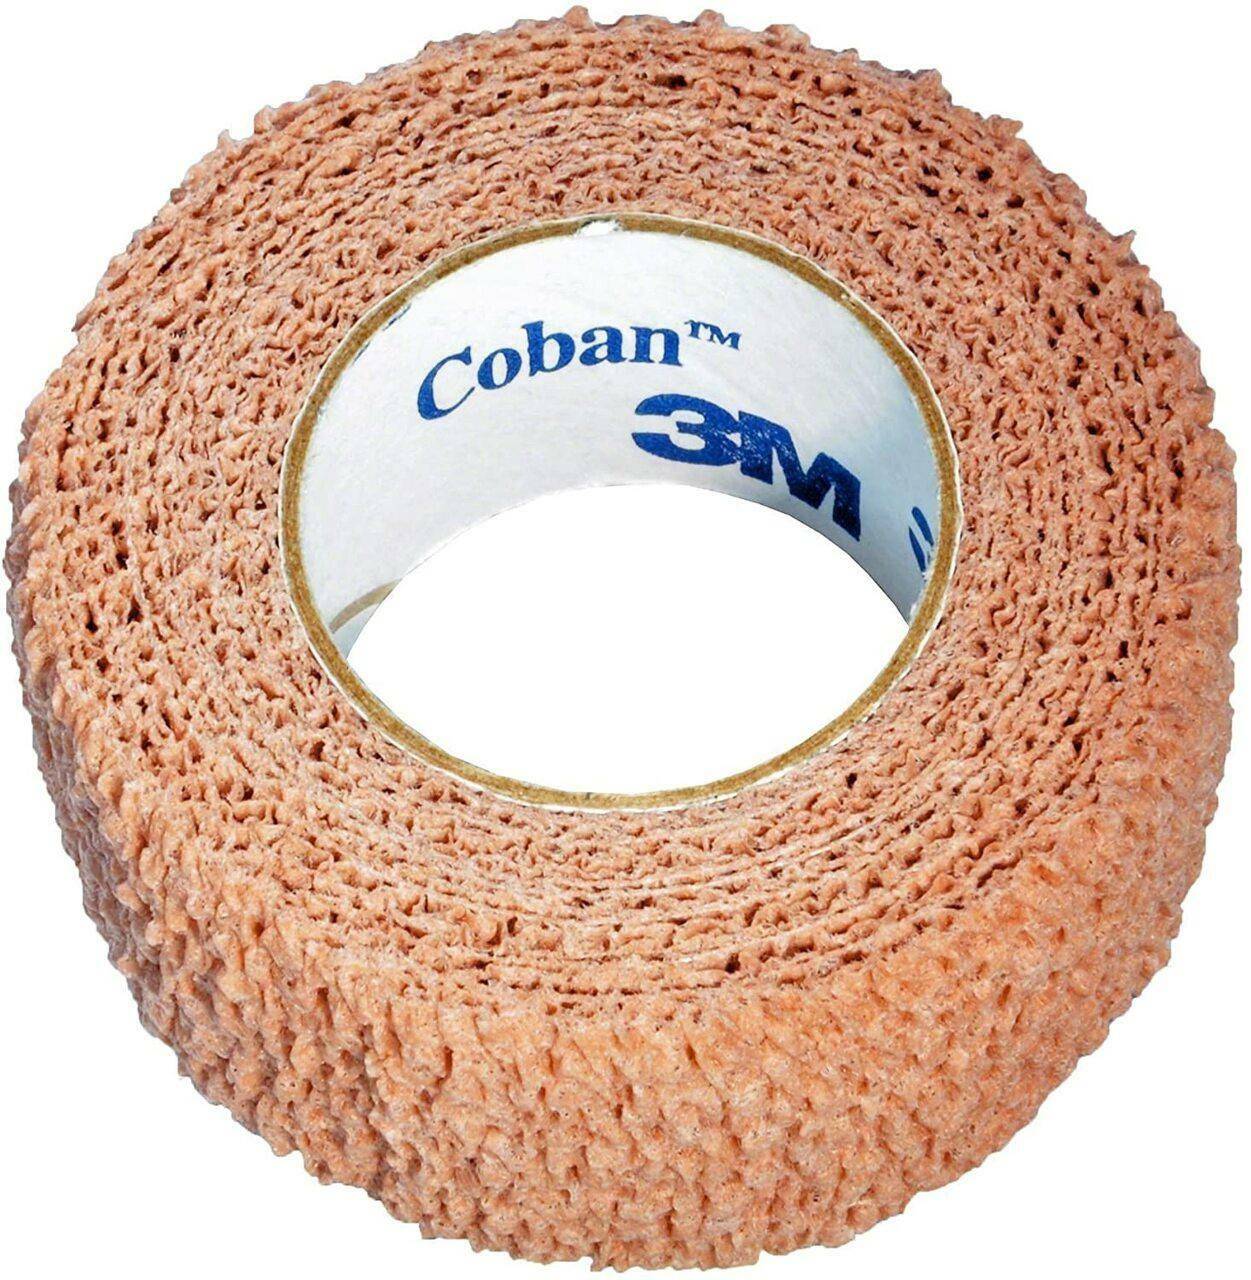 3M Coban Self-Adherent Bandage - Flesh - 2.5cm x 4.5m - UKMEDI